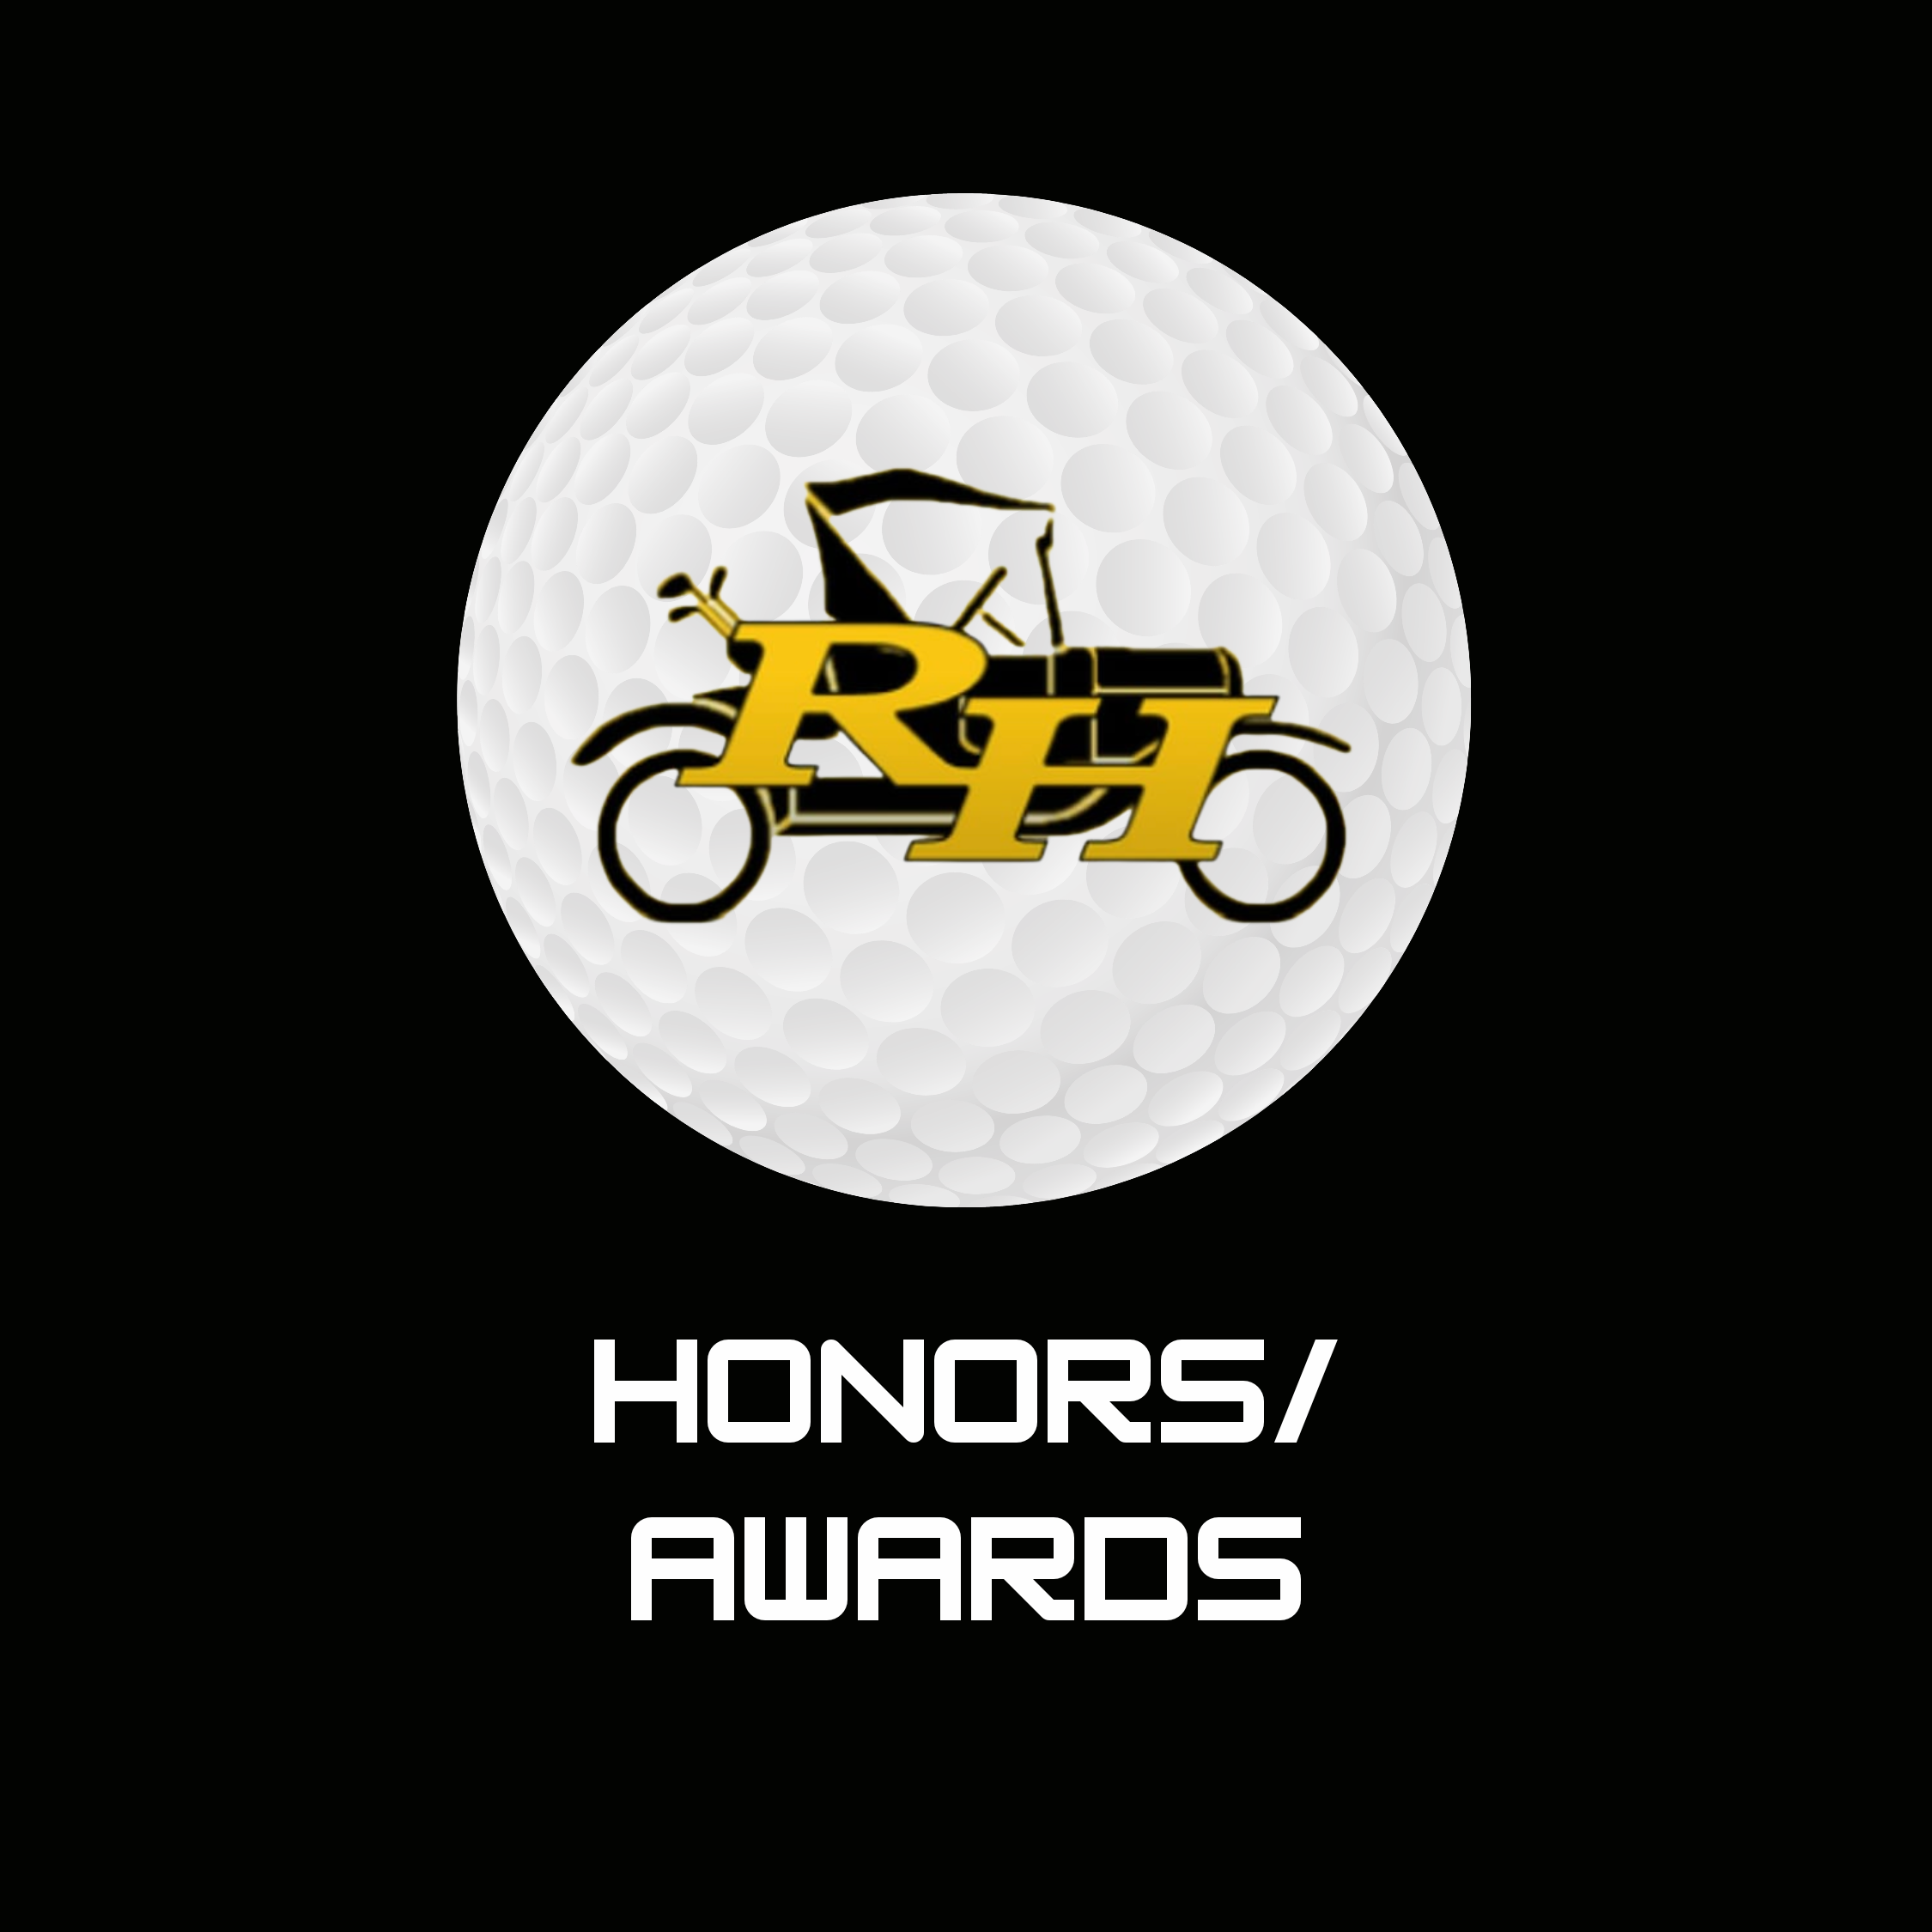 Honors/Awards